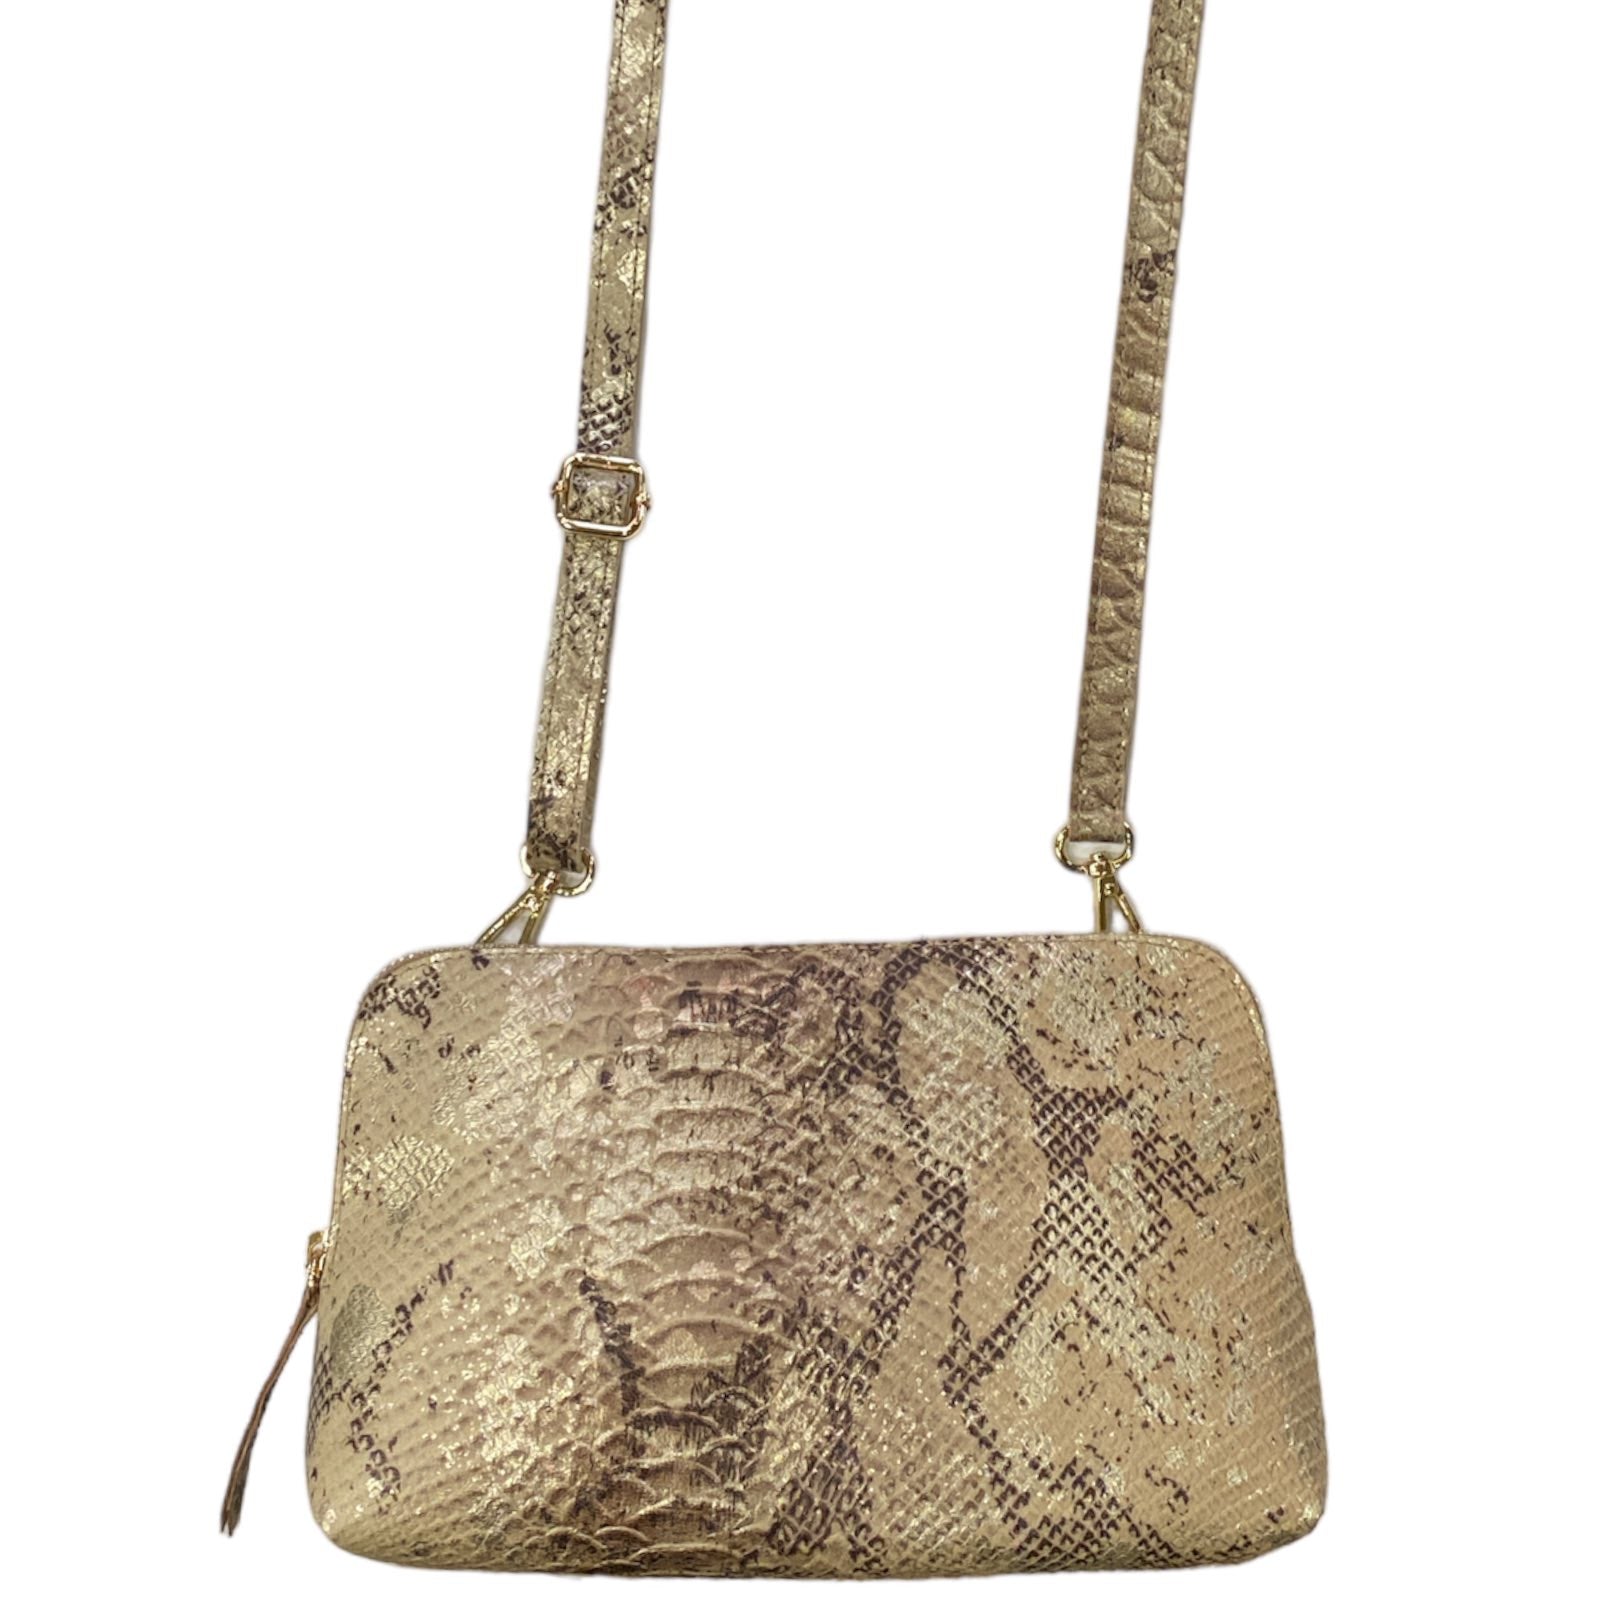 Box XL. Beige gold snake-print leather messenger bag